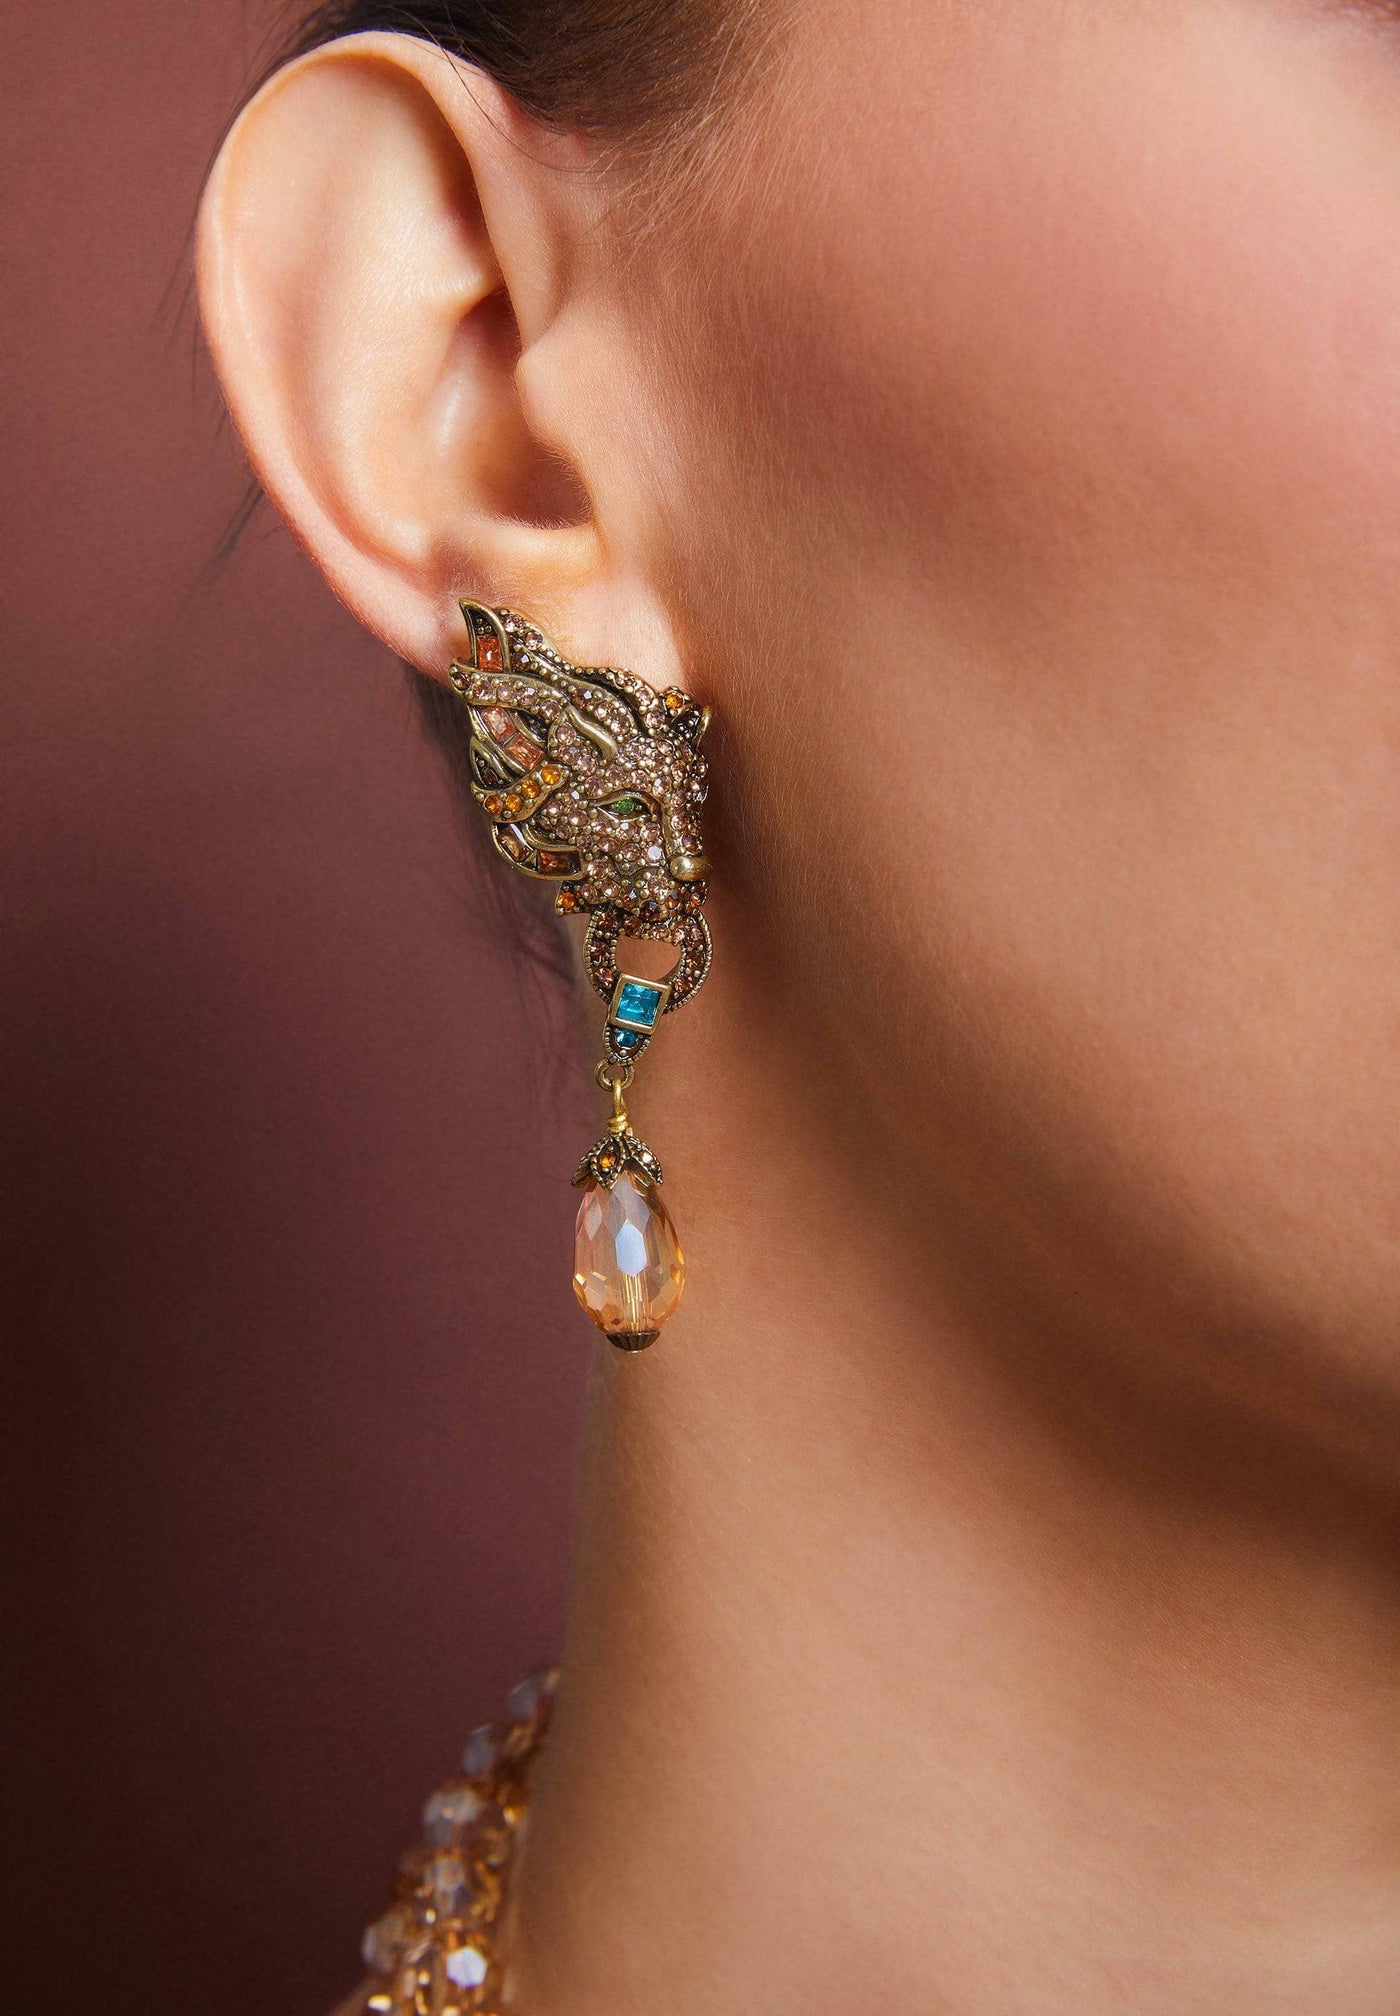 HEIDI DAUS®"Me Wow" Beaded Crystal Lion Dangle Earrings